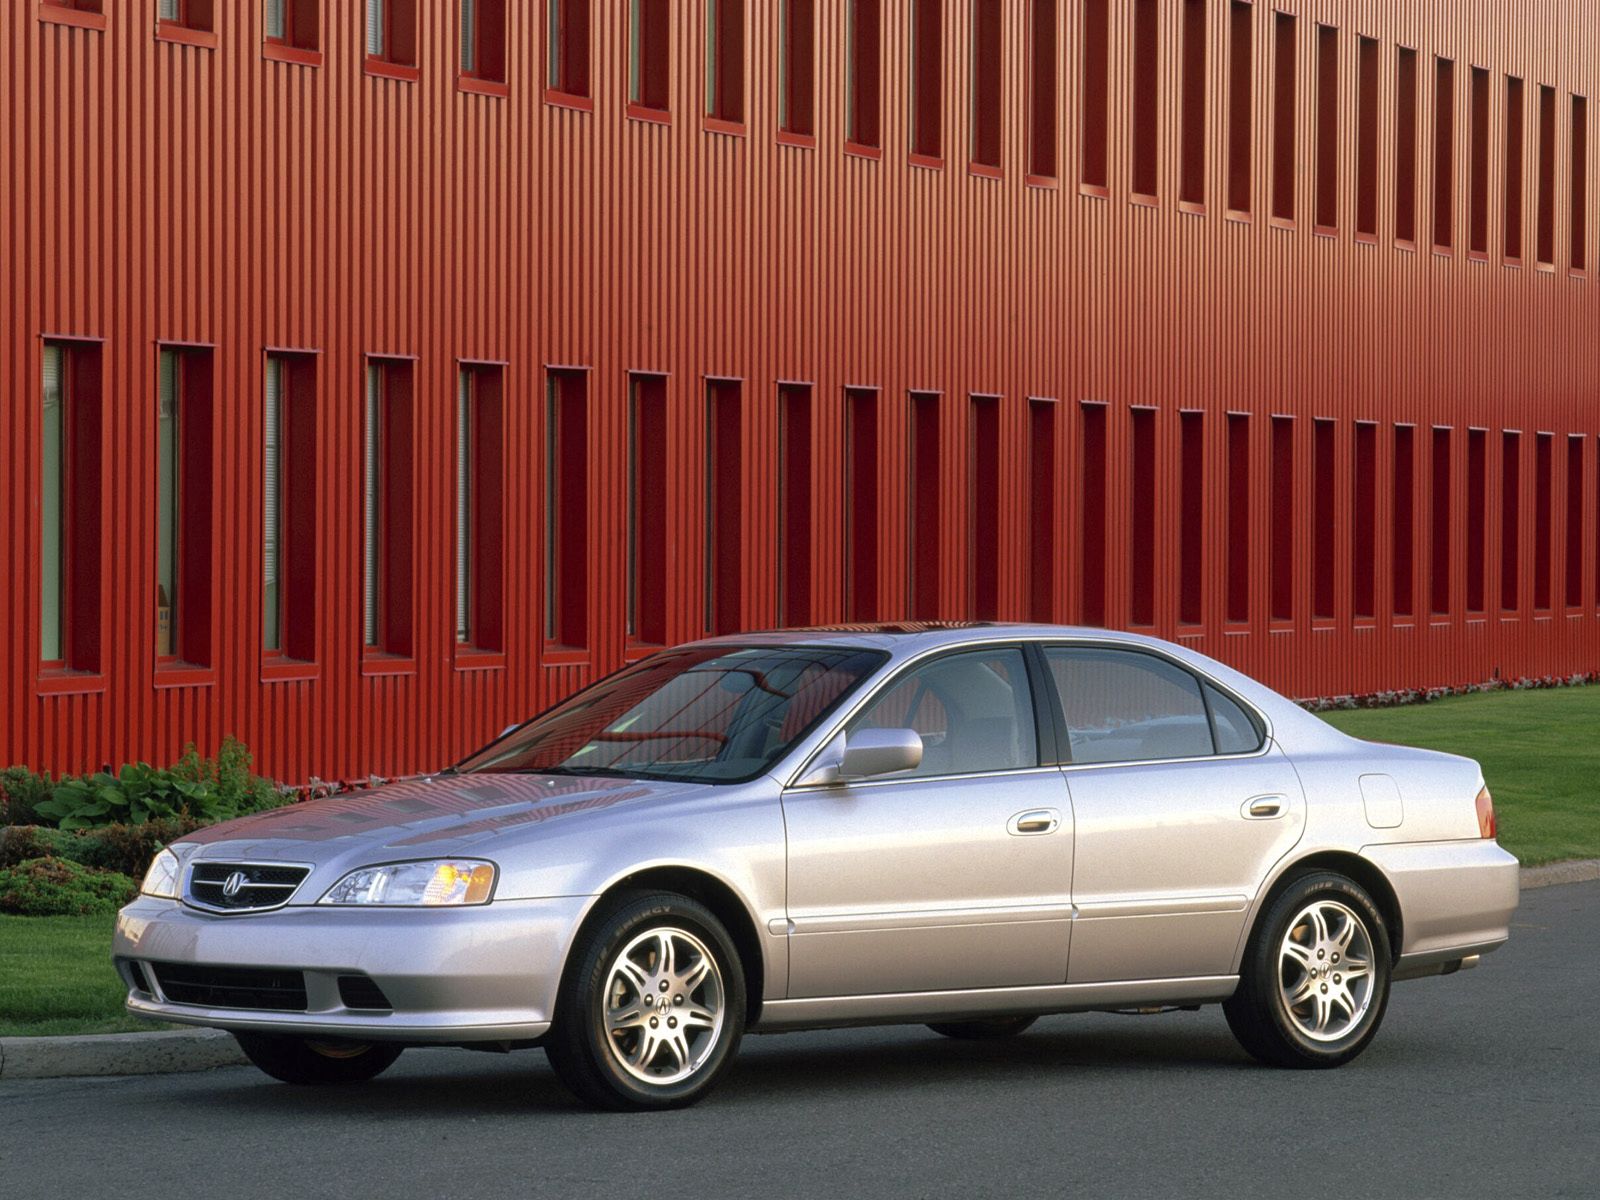 tl, auto, grass, acura, cars, building, asphalt, side view, style, akura, silver metallic, 1999